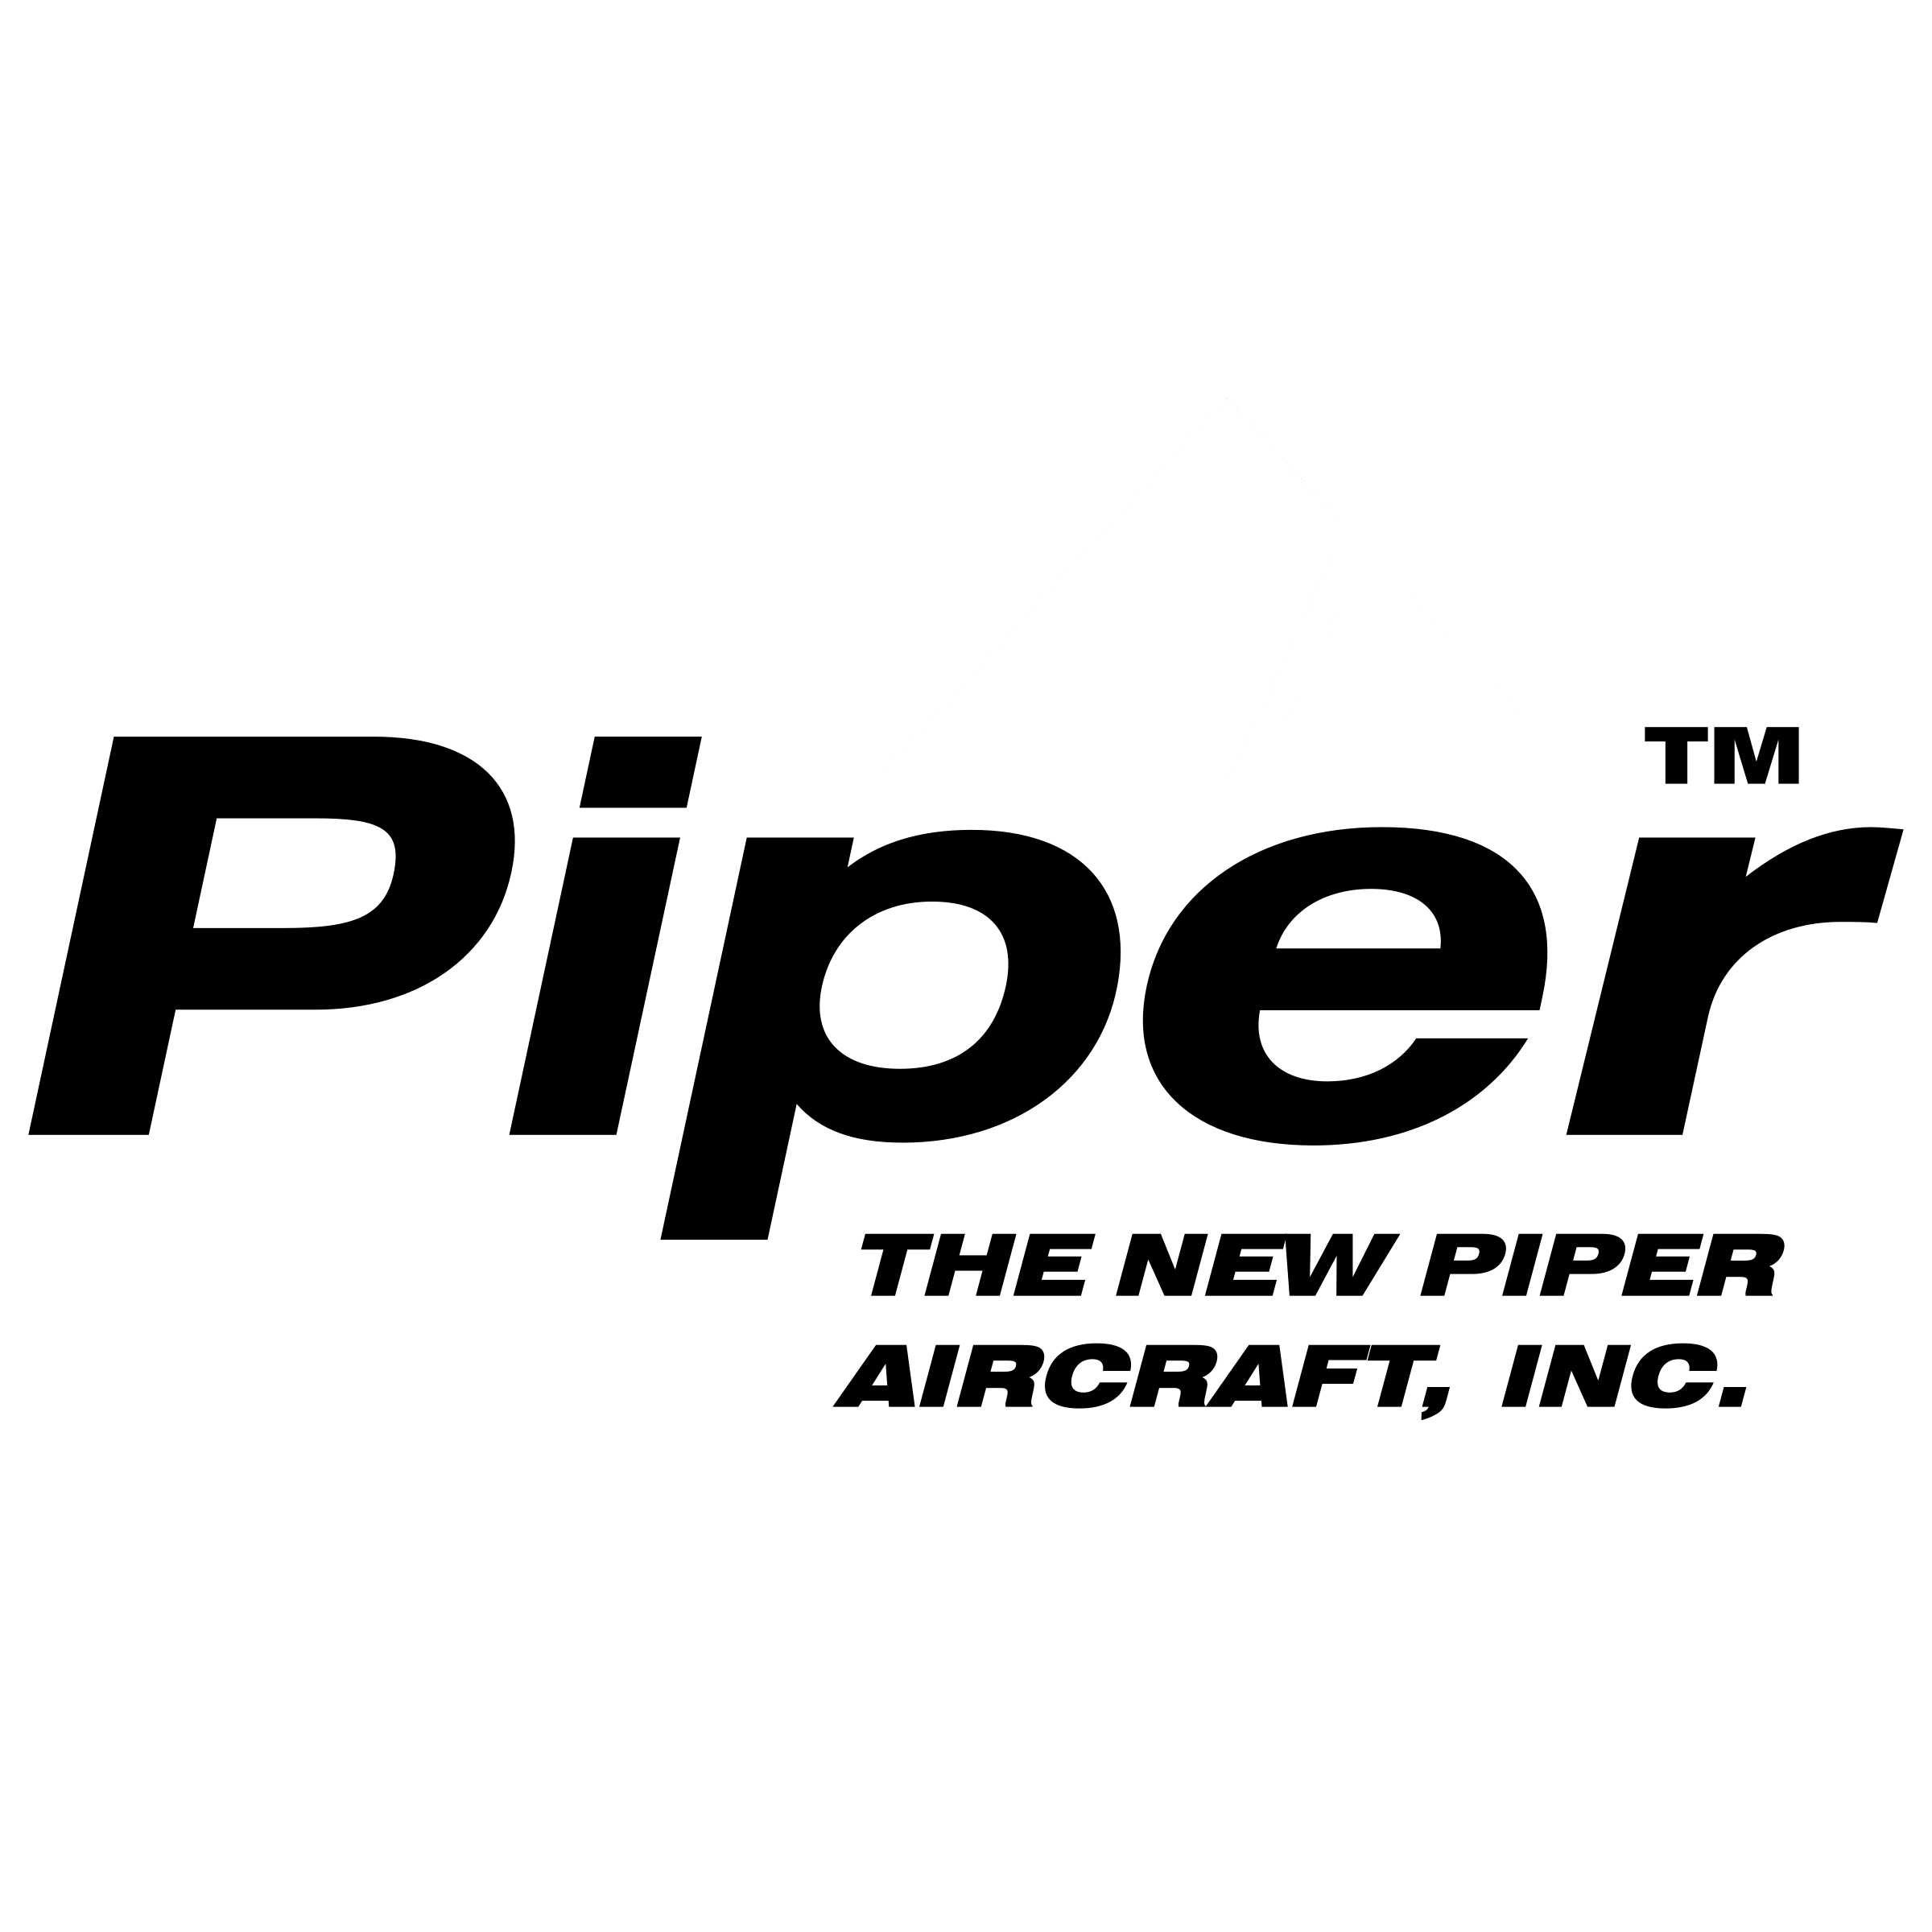 Piper Aircraft Logo - The New Piper Aircraft Logo PNG Transparent & SVG Vector - Freebie ...